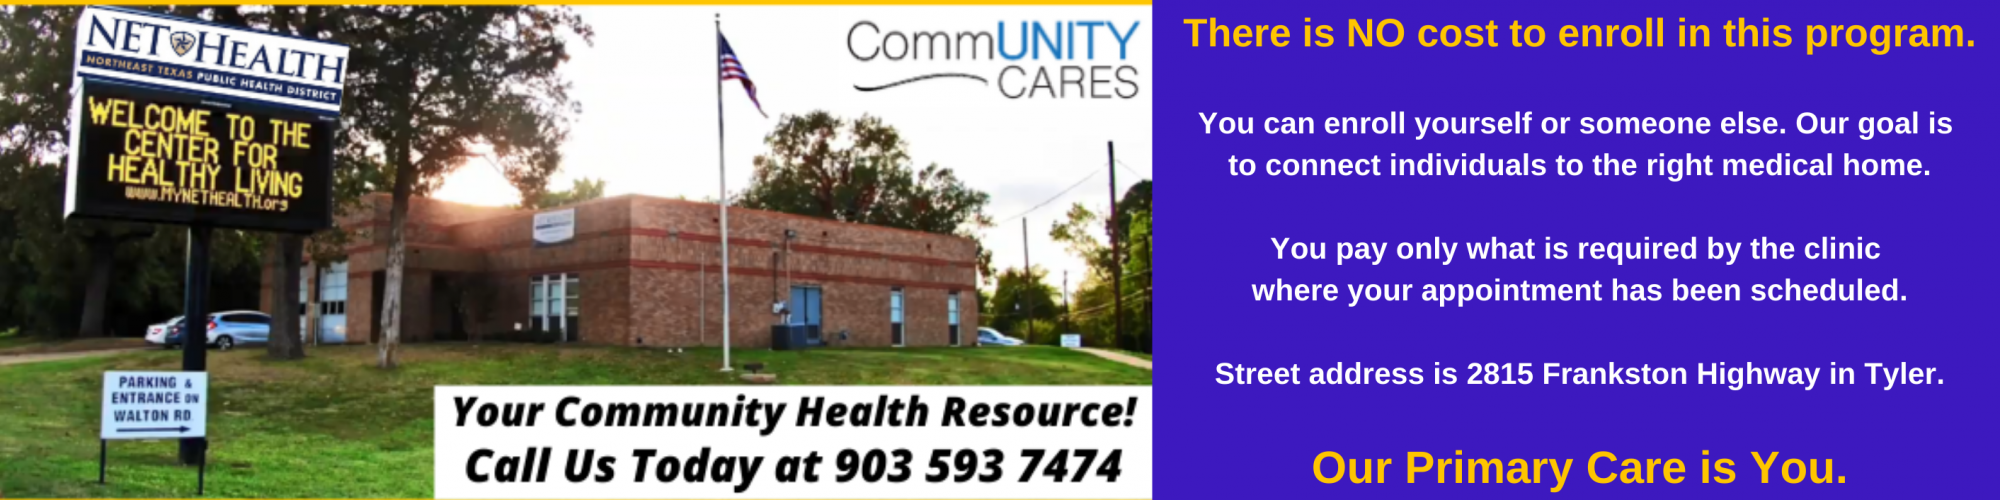 Community Cares